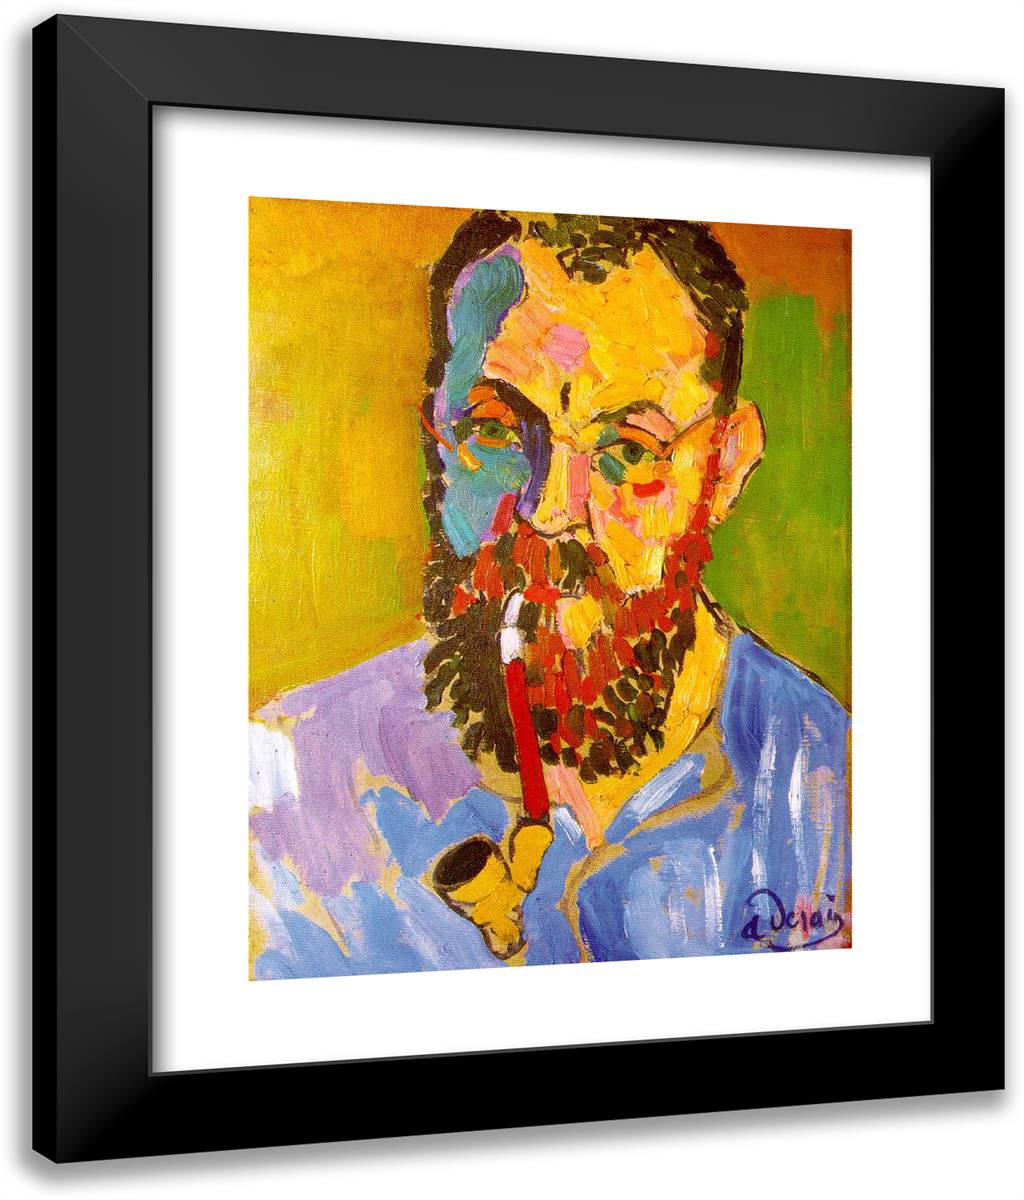 Portrait of Matisse 20x24 Black Modern Wood Framed Art Print Poster by Derain, Andre